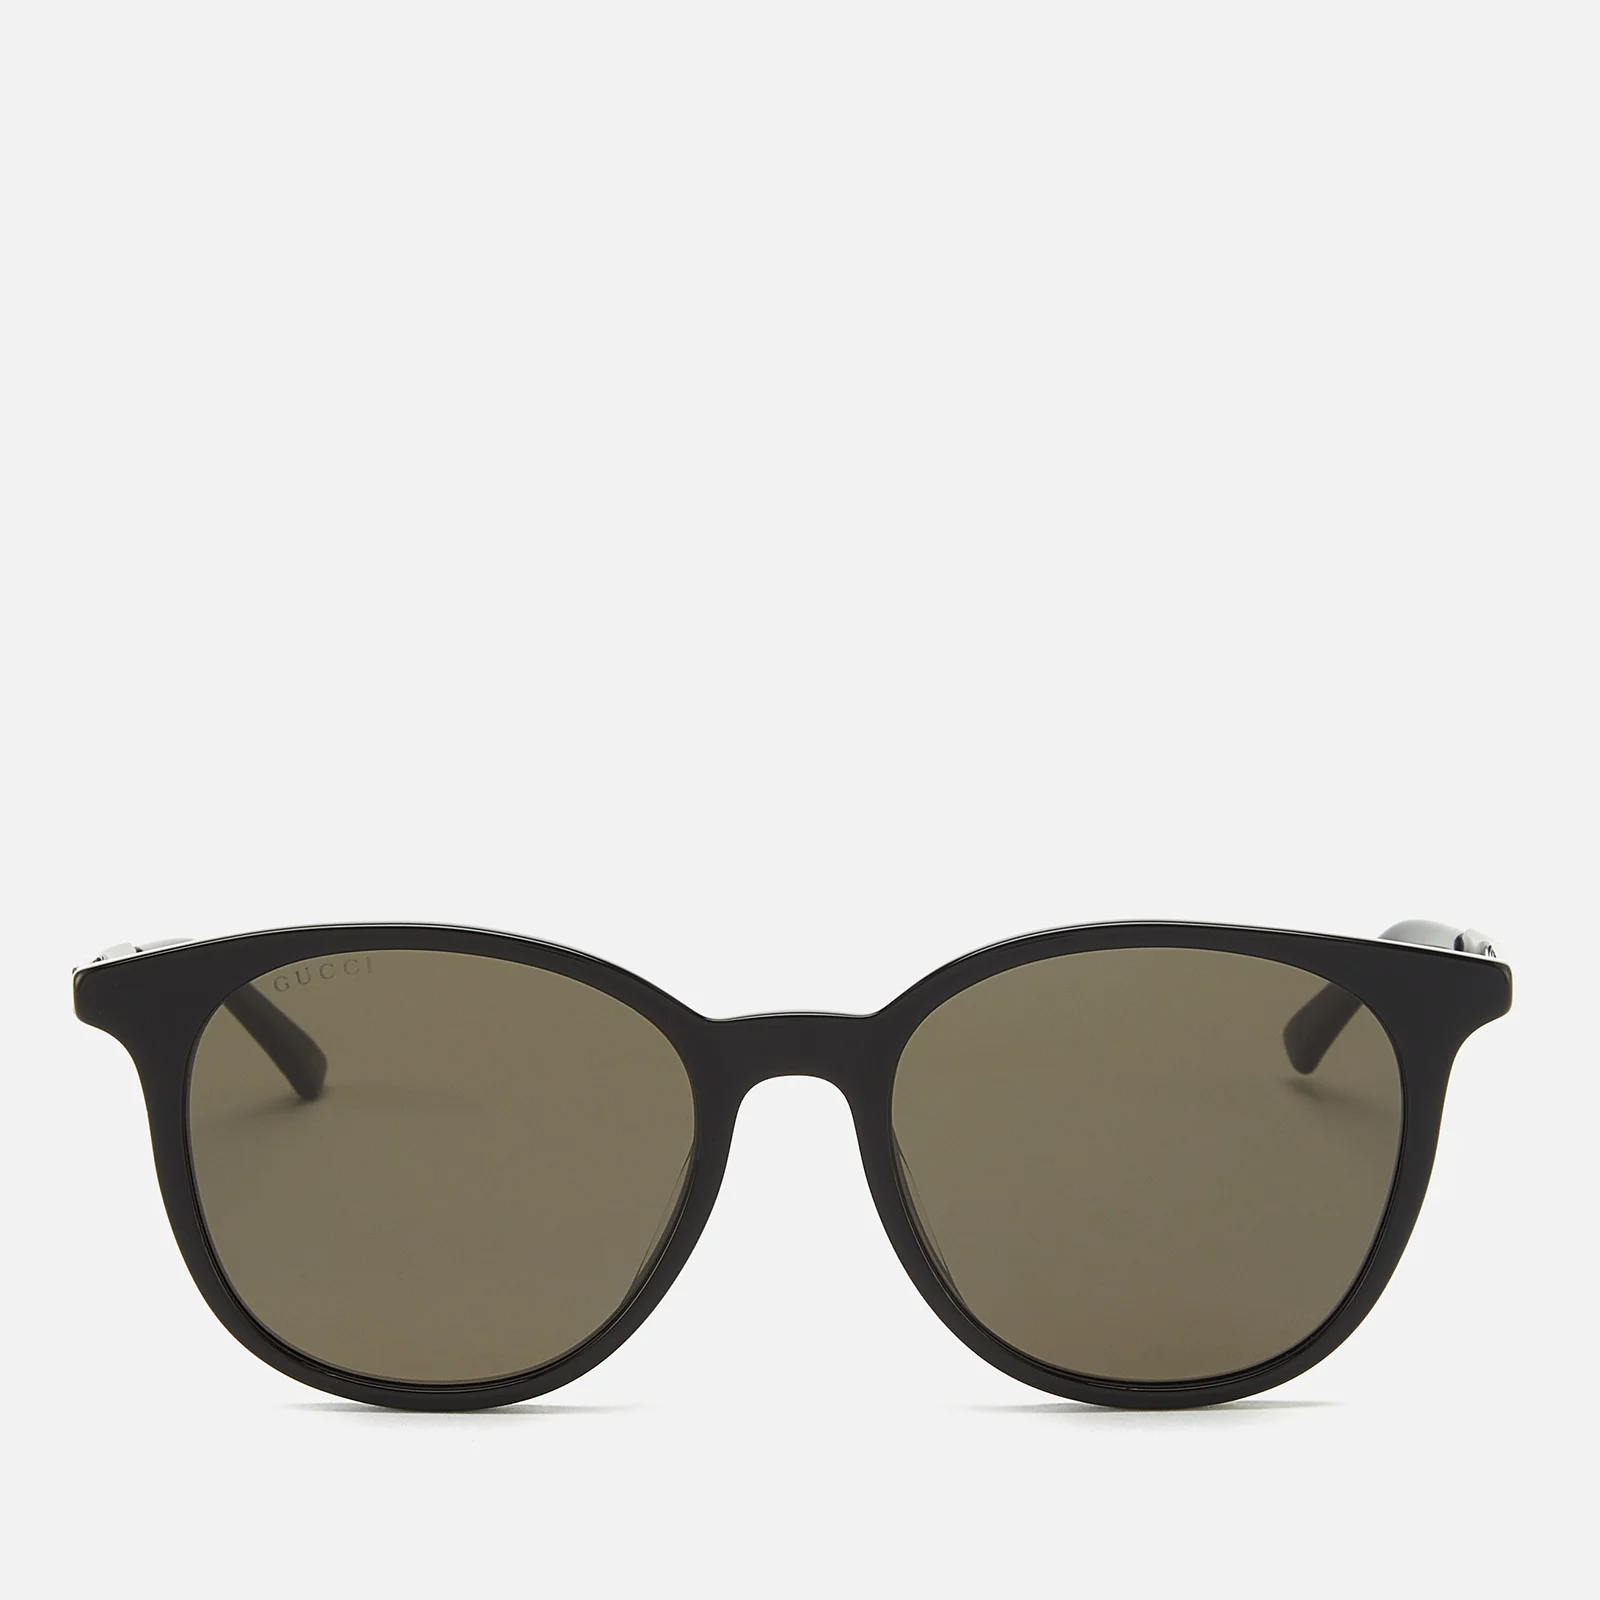 Gucci Men's Acetate Frame Sunglasses - Shiny Solid Black Image 1